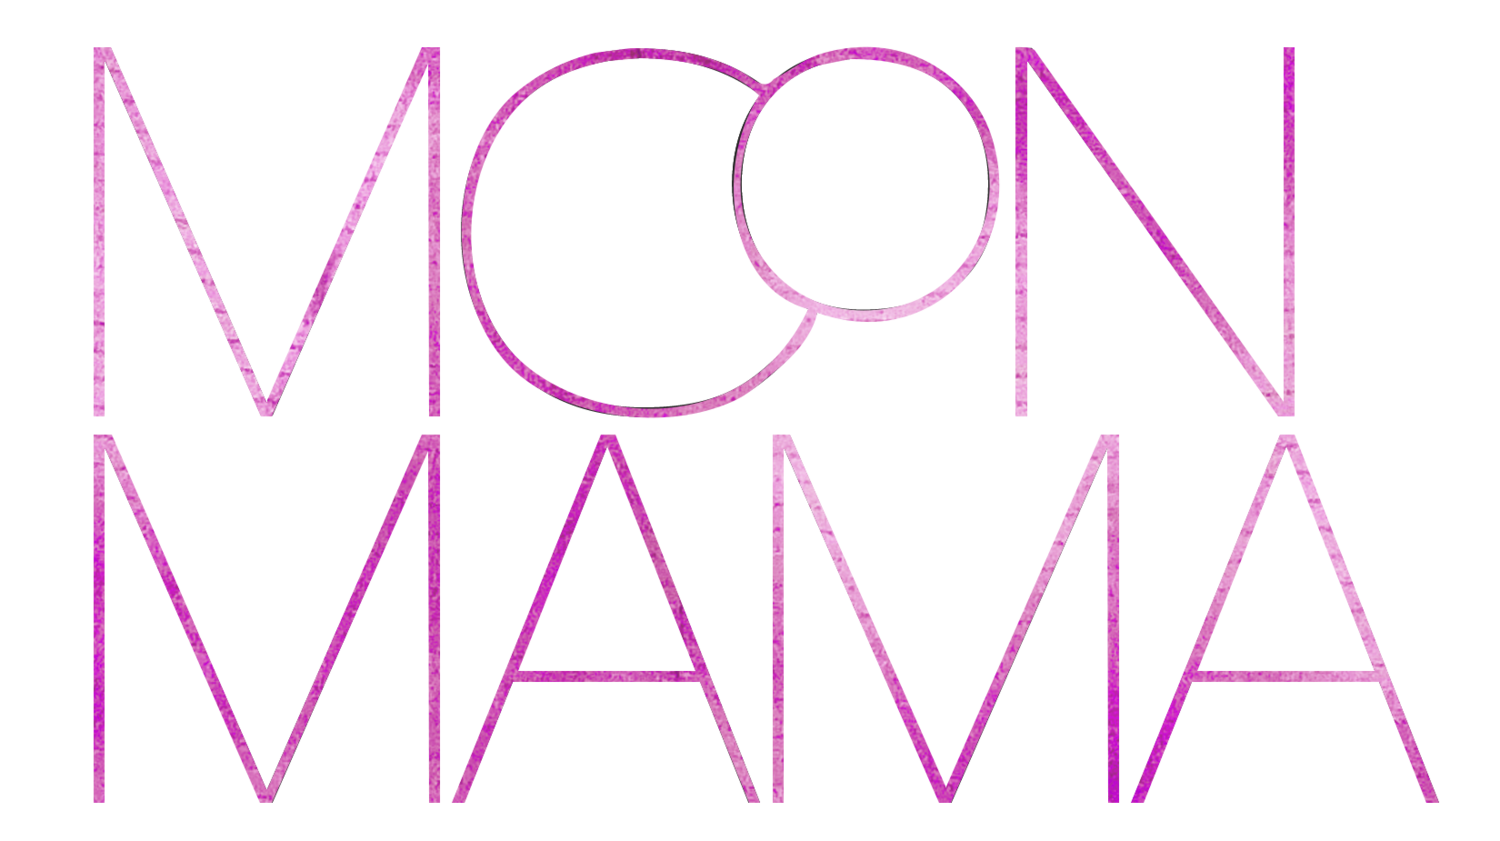 Moon Mama